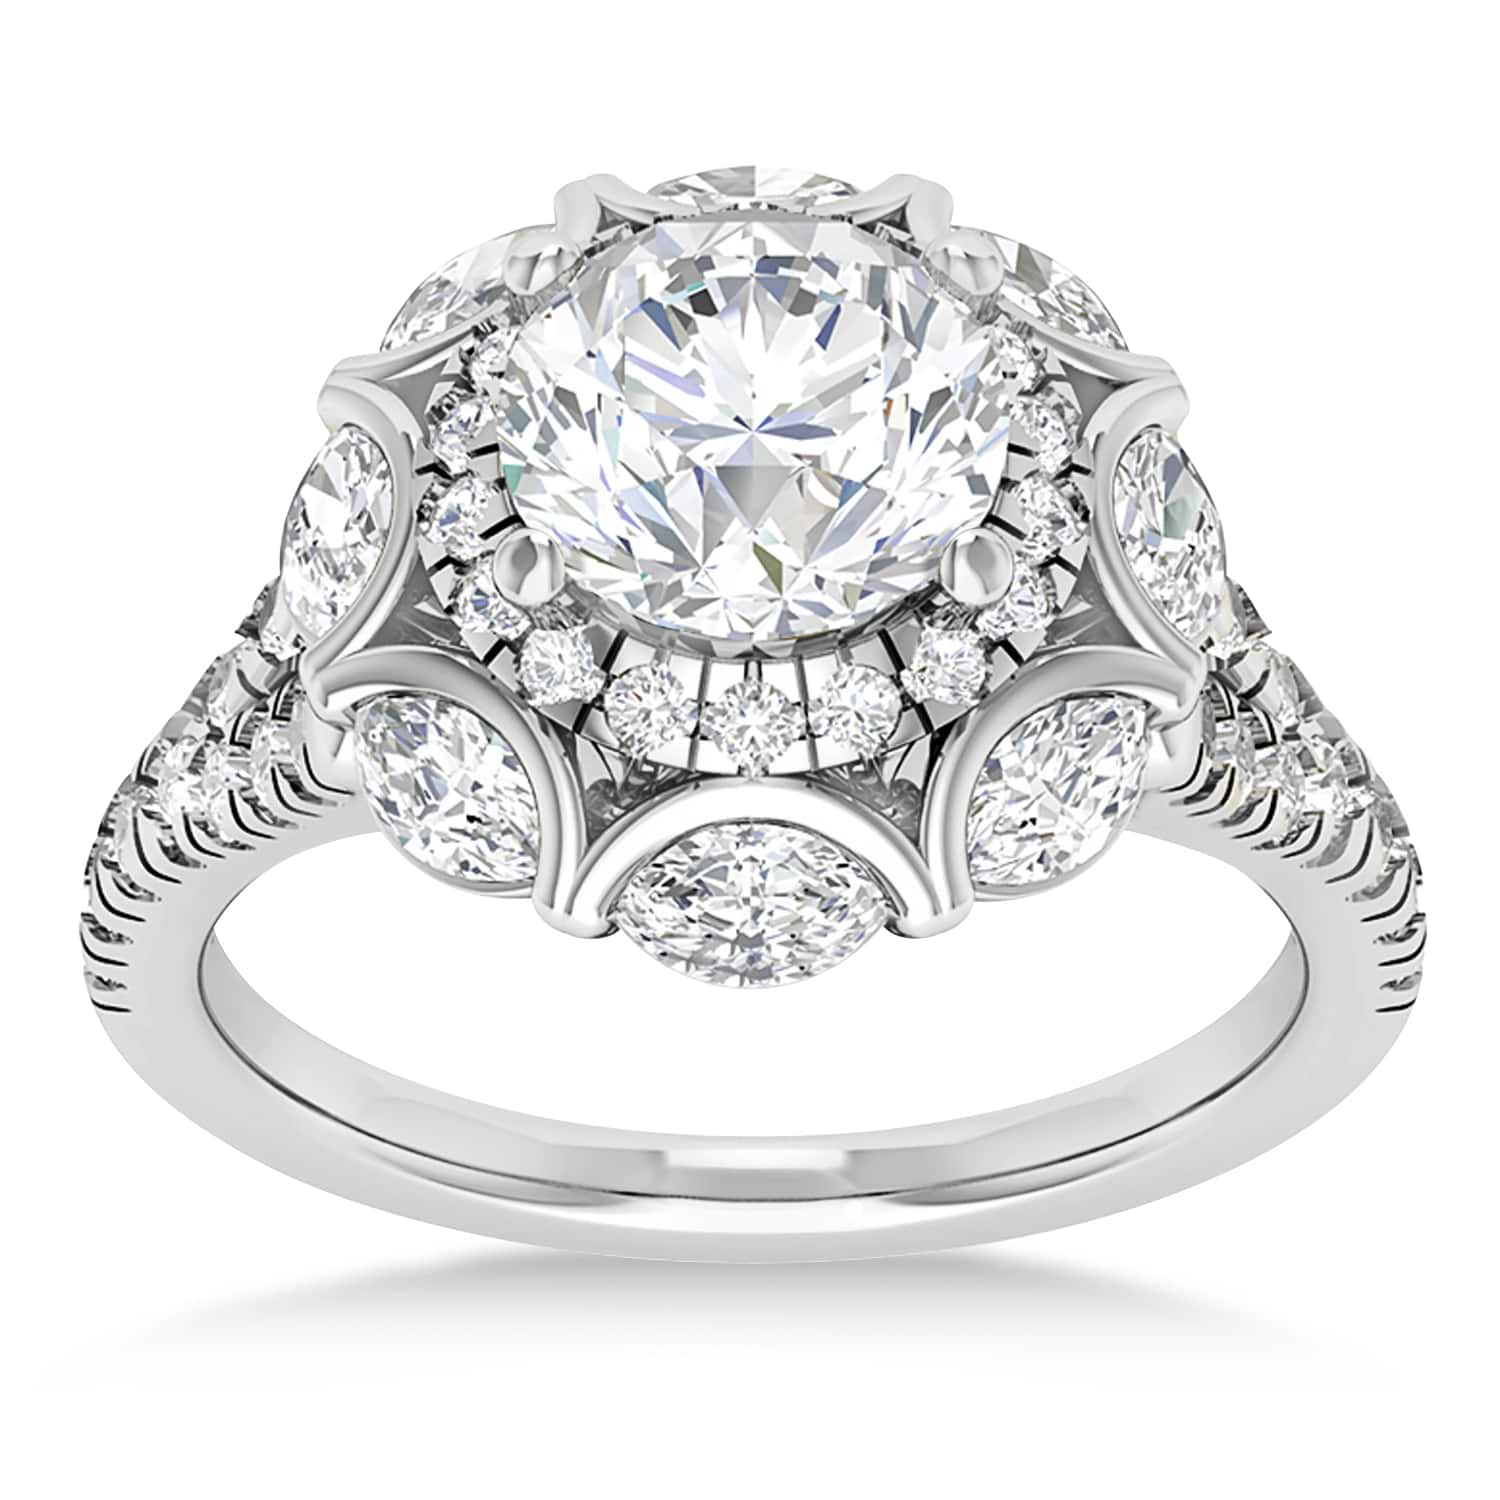 Diamond Accented Halo Engagement Ring Platinum (0.92ct)